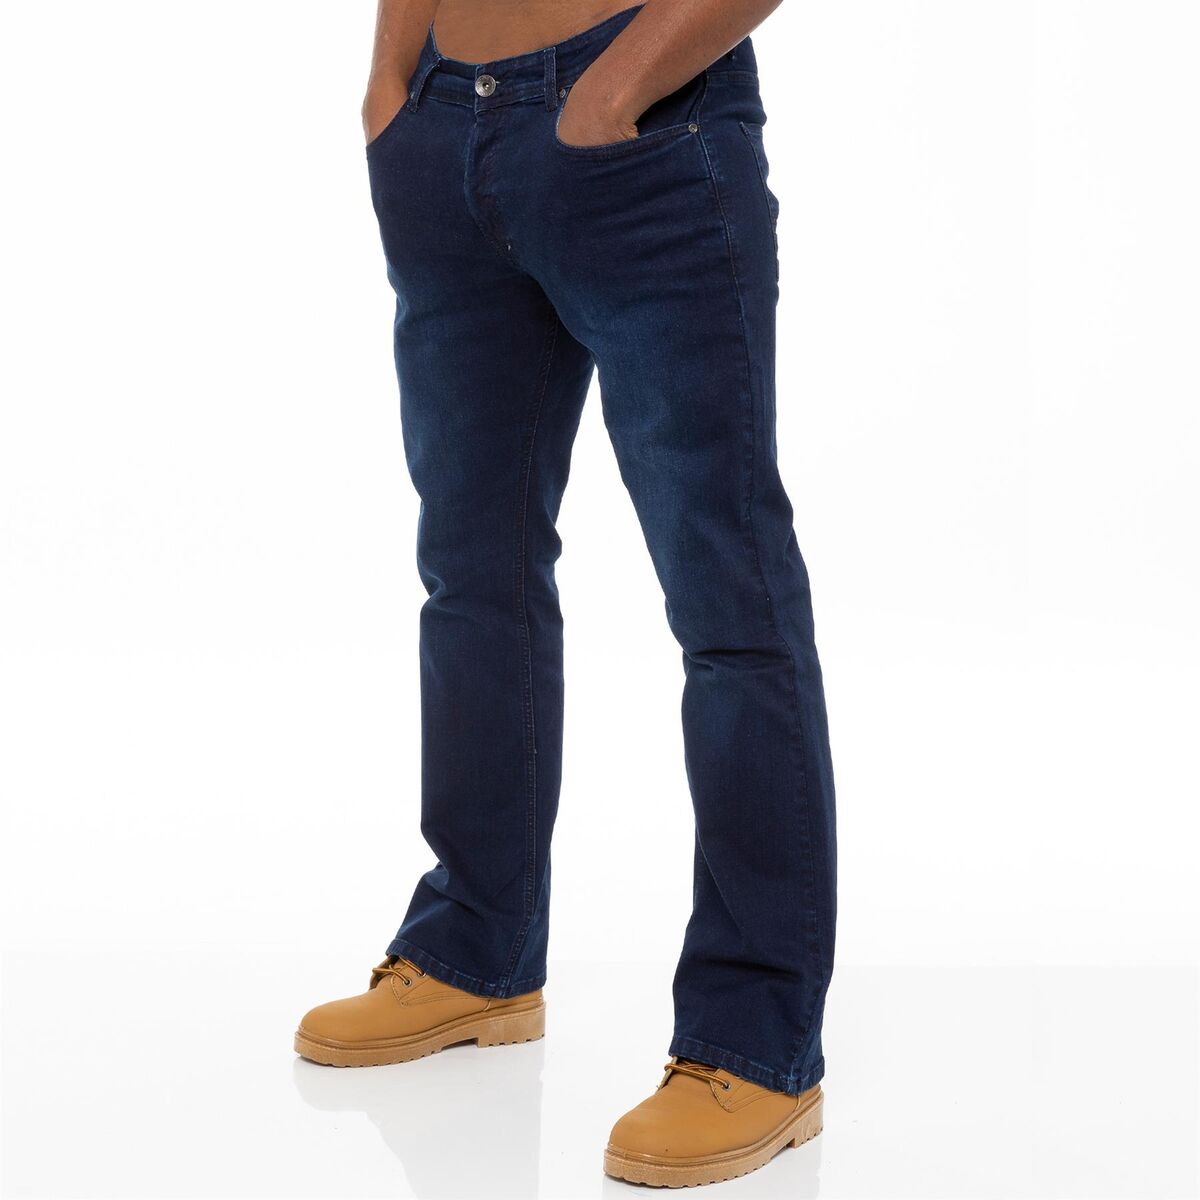 Enzo Bootcut Denim Pants Stretch eBay Jeans All Mens | Sizes Flared Wide Trouser Leg UK